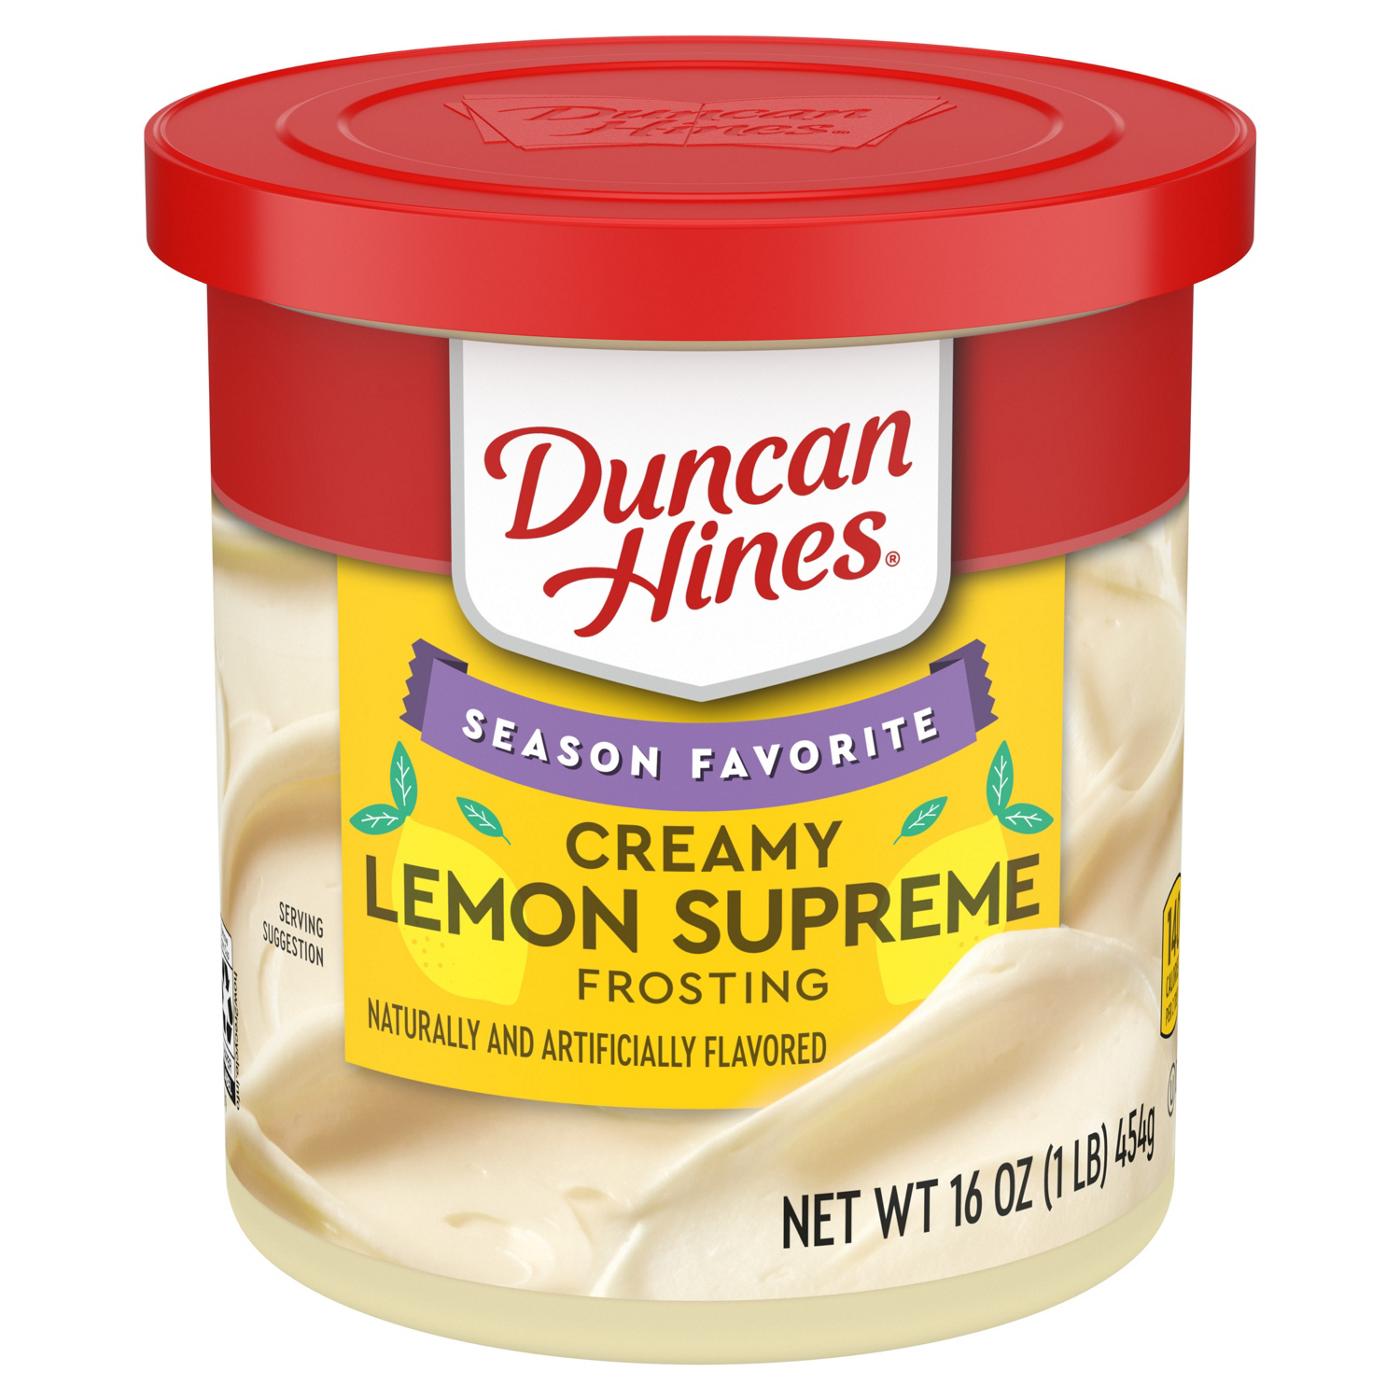 Duncan Hines Creamy Lemon Supreme Frosting; image 1 of 5